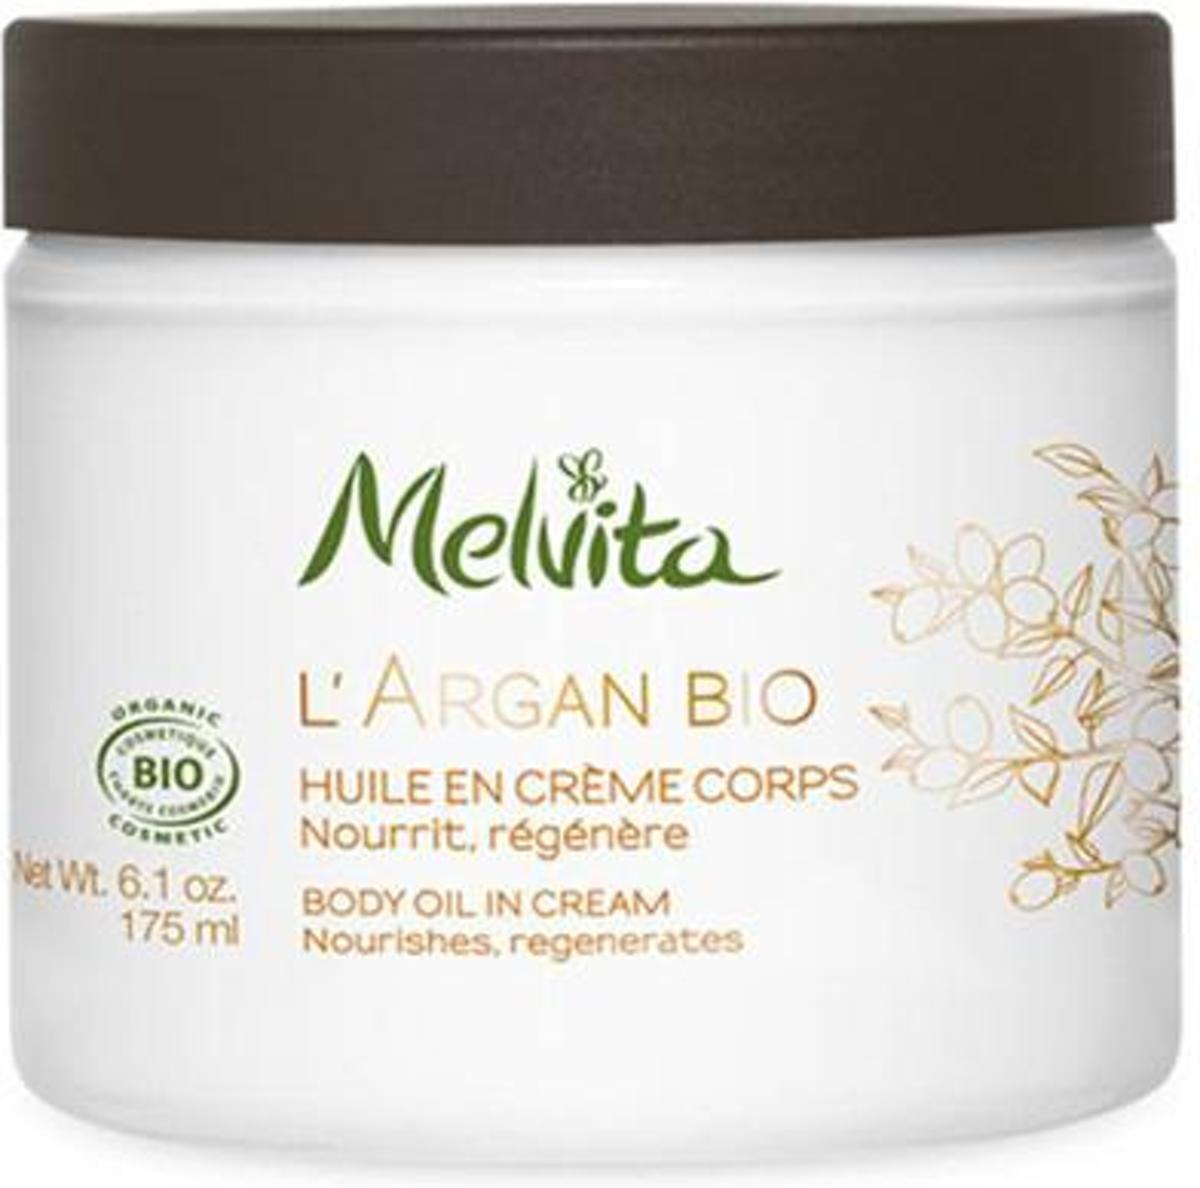 Melvita - Argan bio body oil in cream - 175 ml